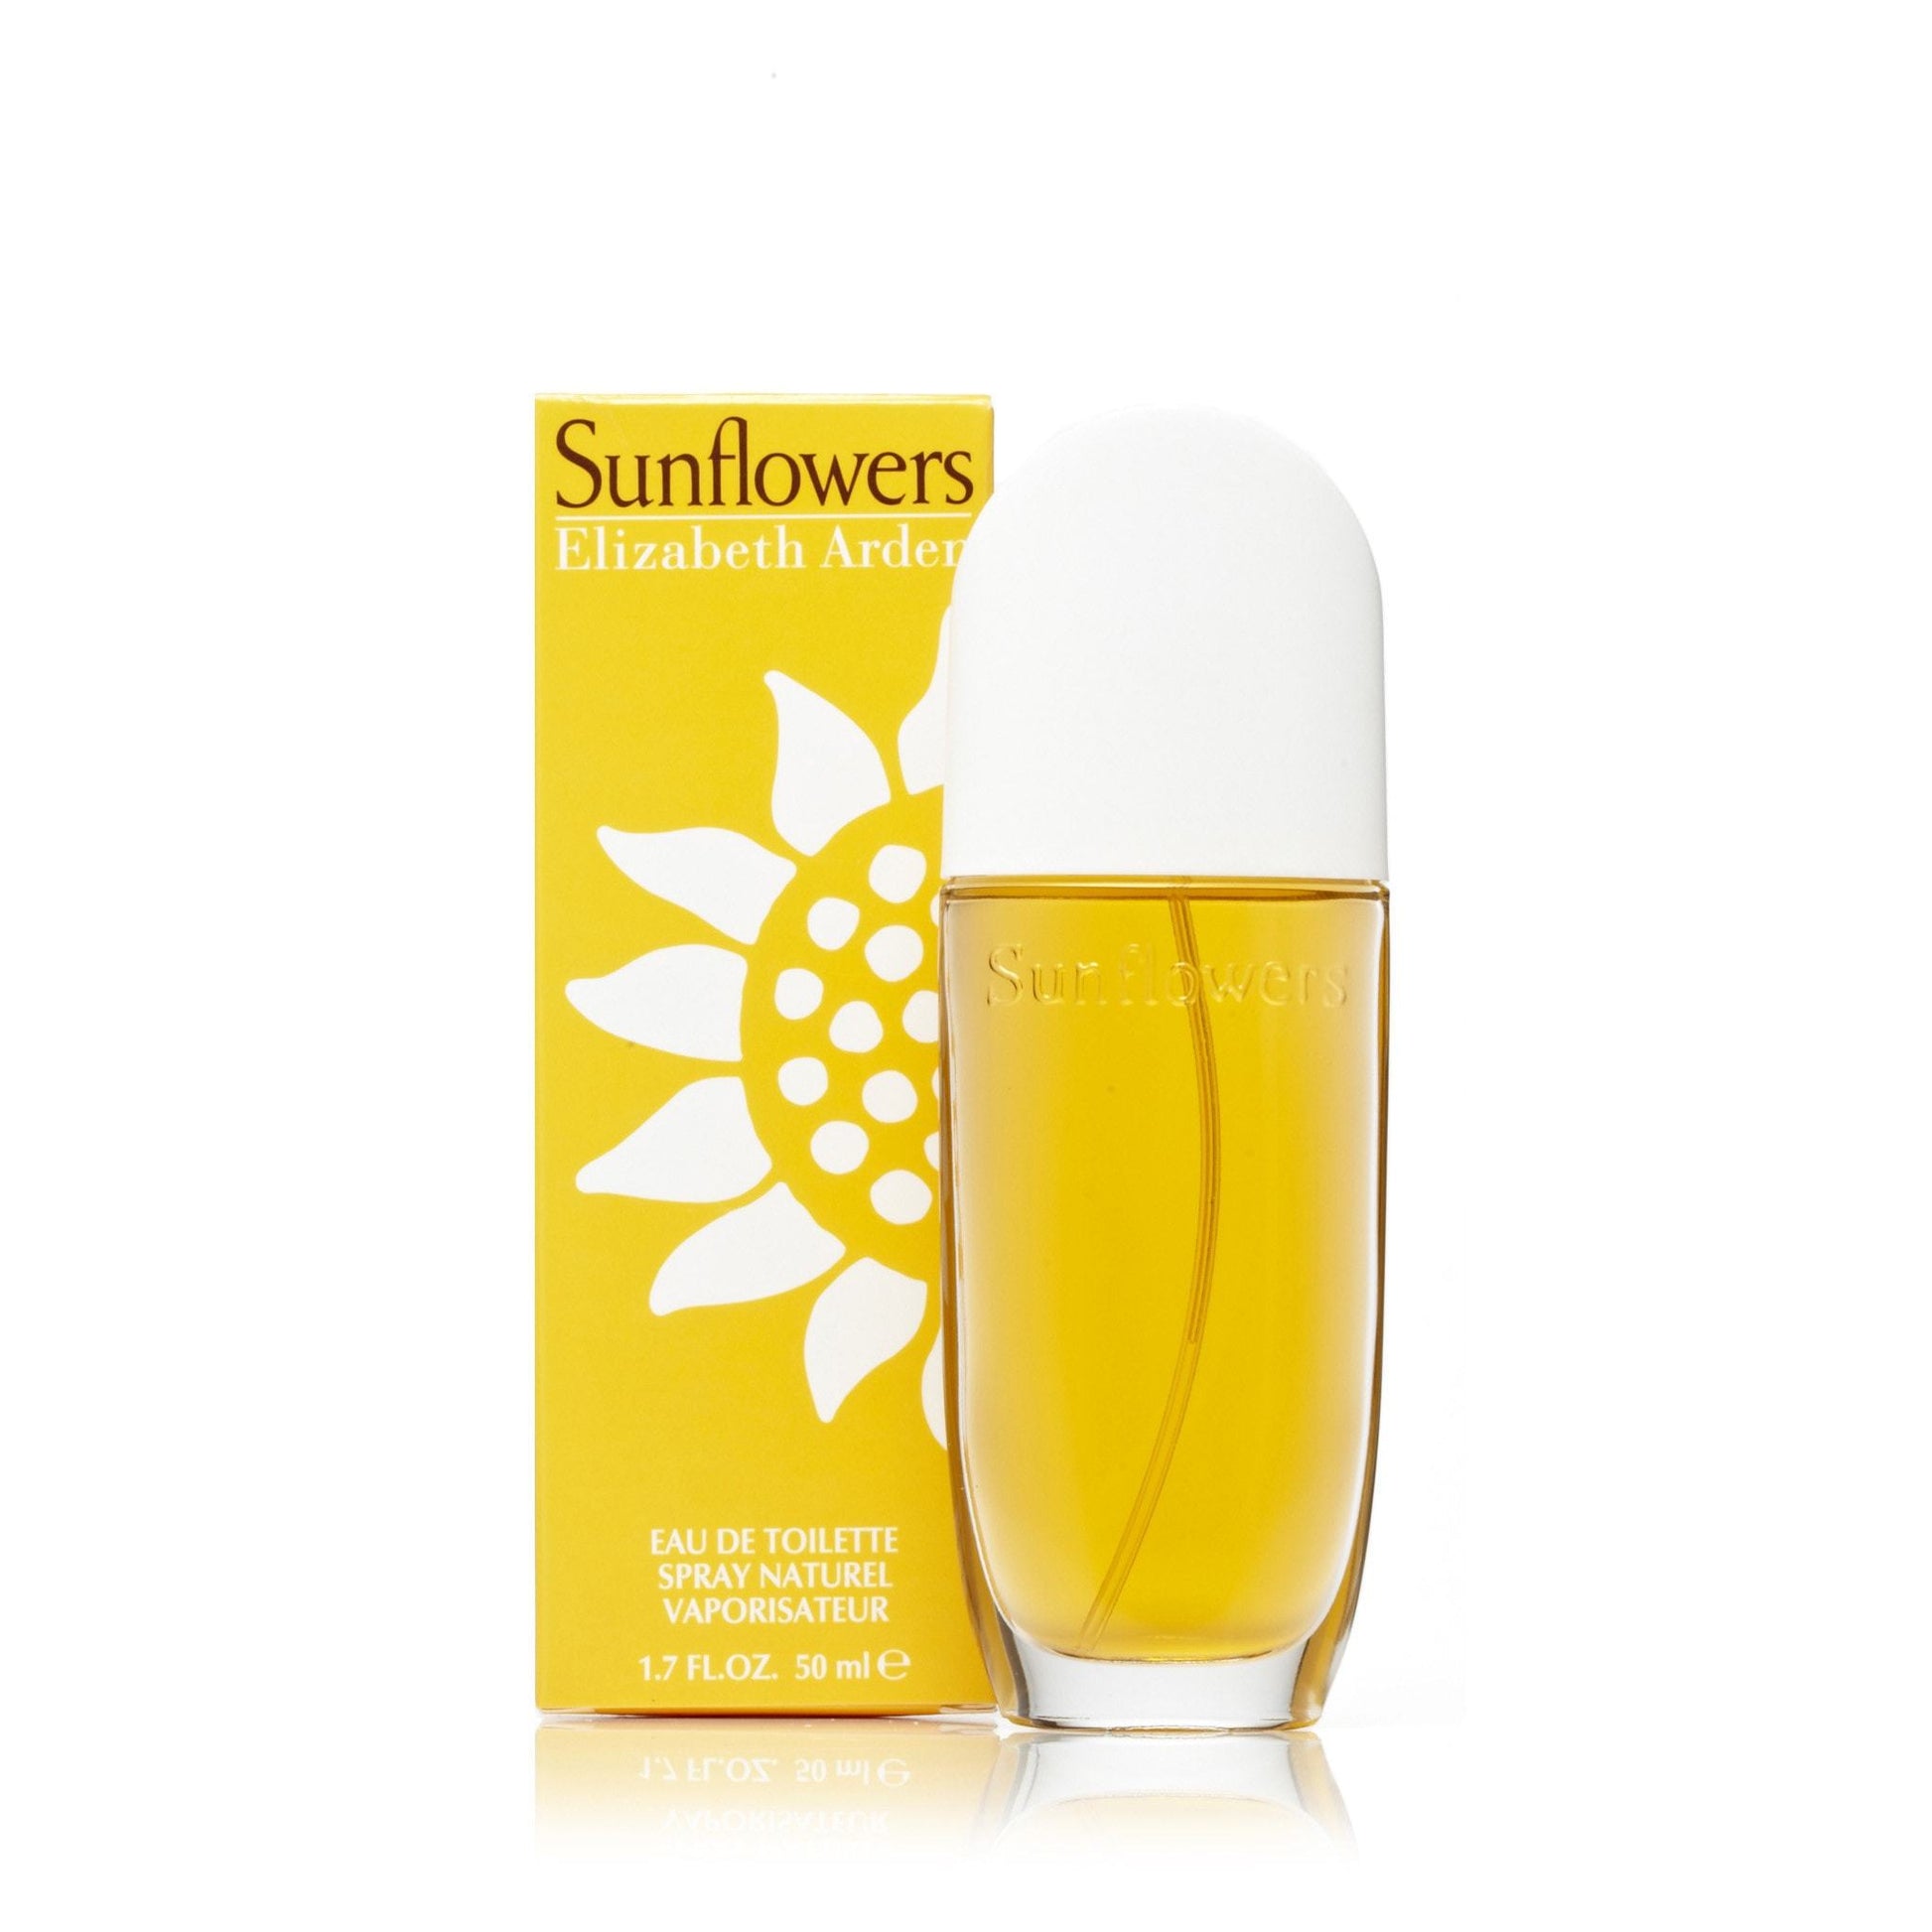 Sunflowers Eau de Toilette Spray for Women by Elizabeth Arden, Product image 7